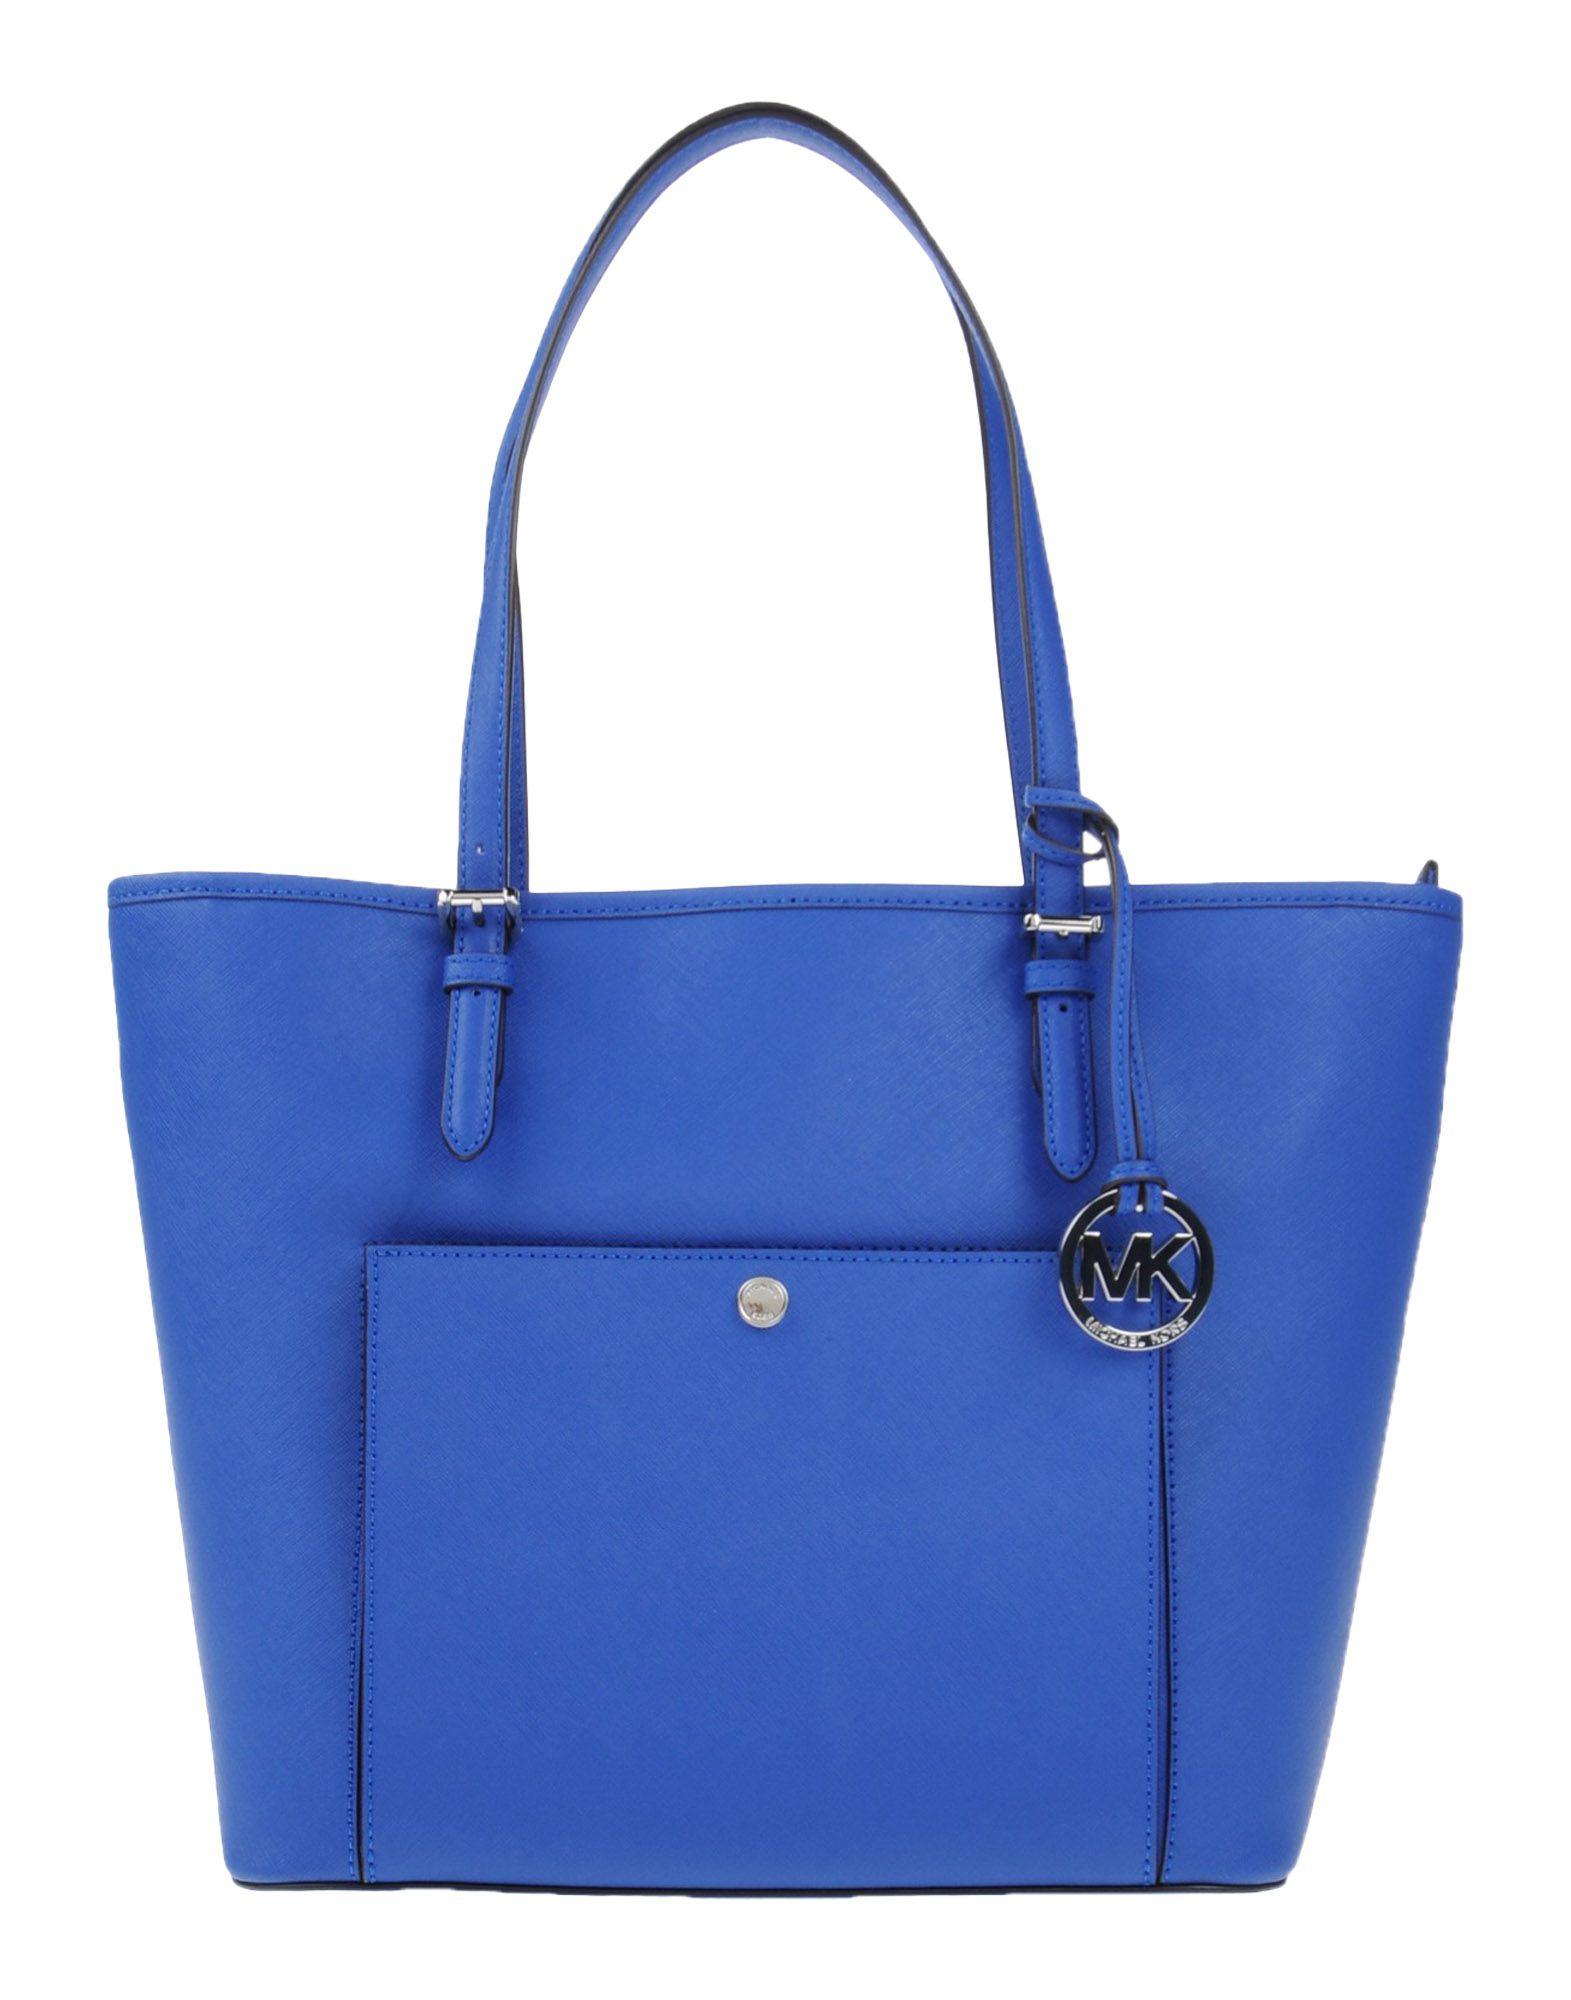 Lyst - Michael Michael Kors Handbag in Blue